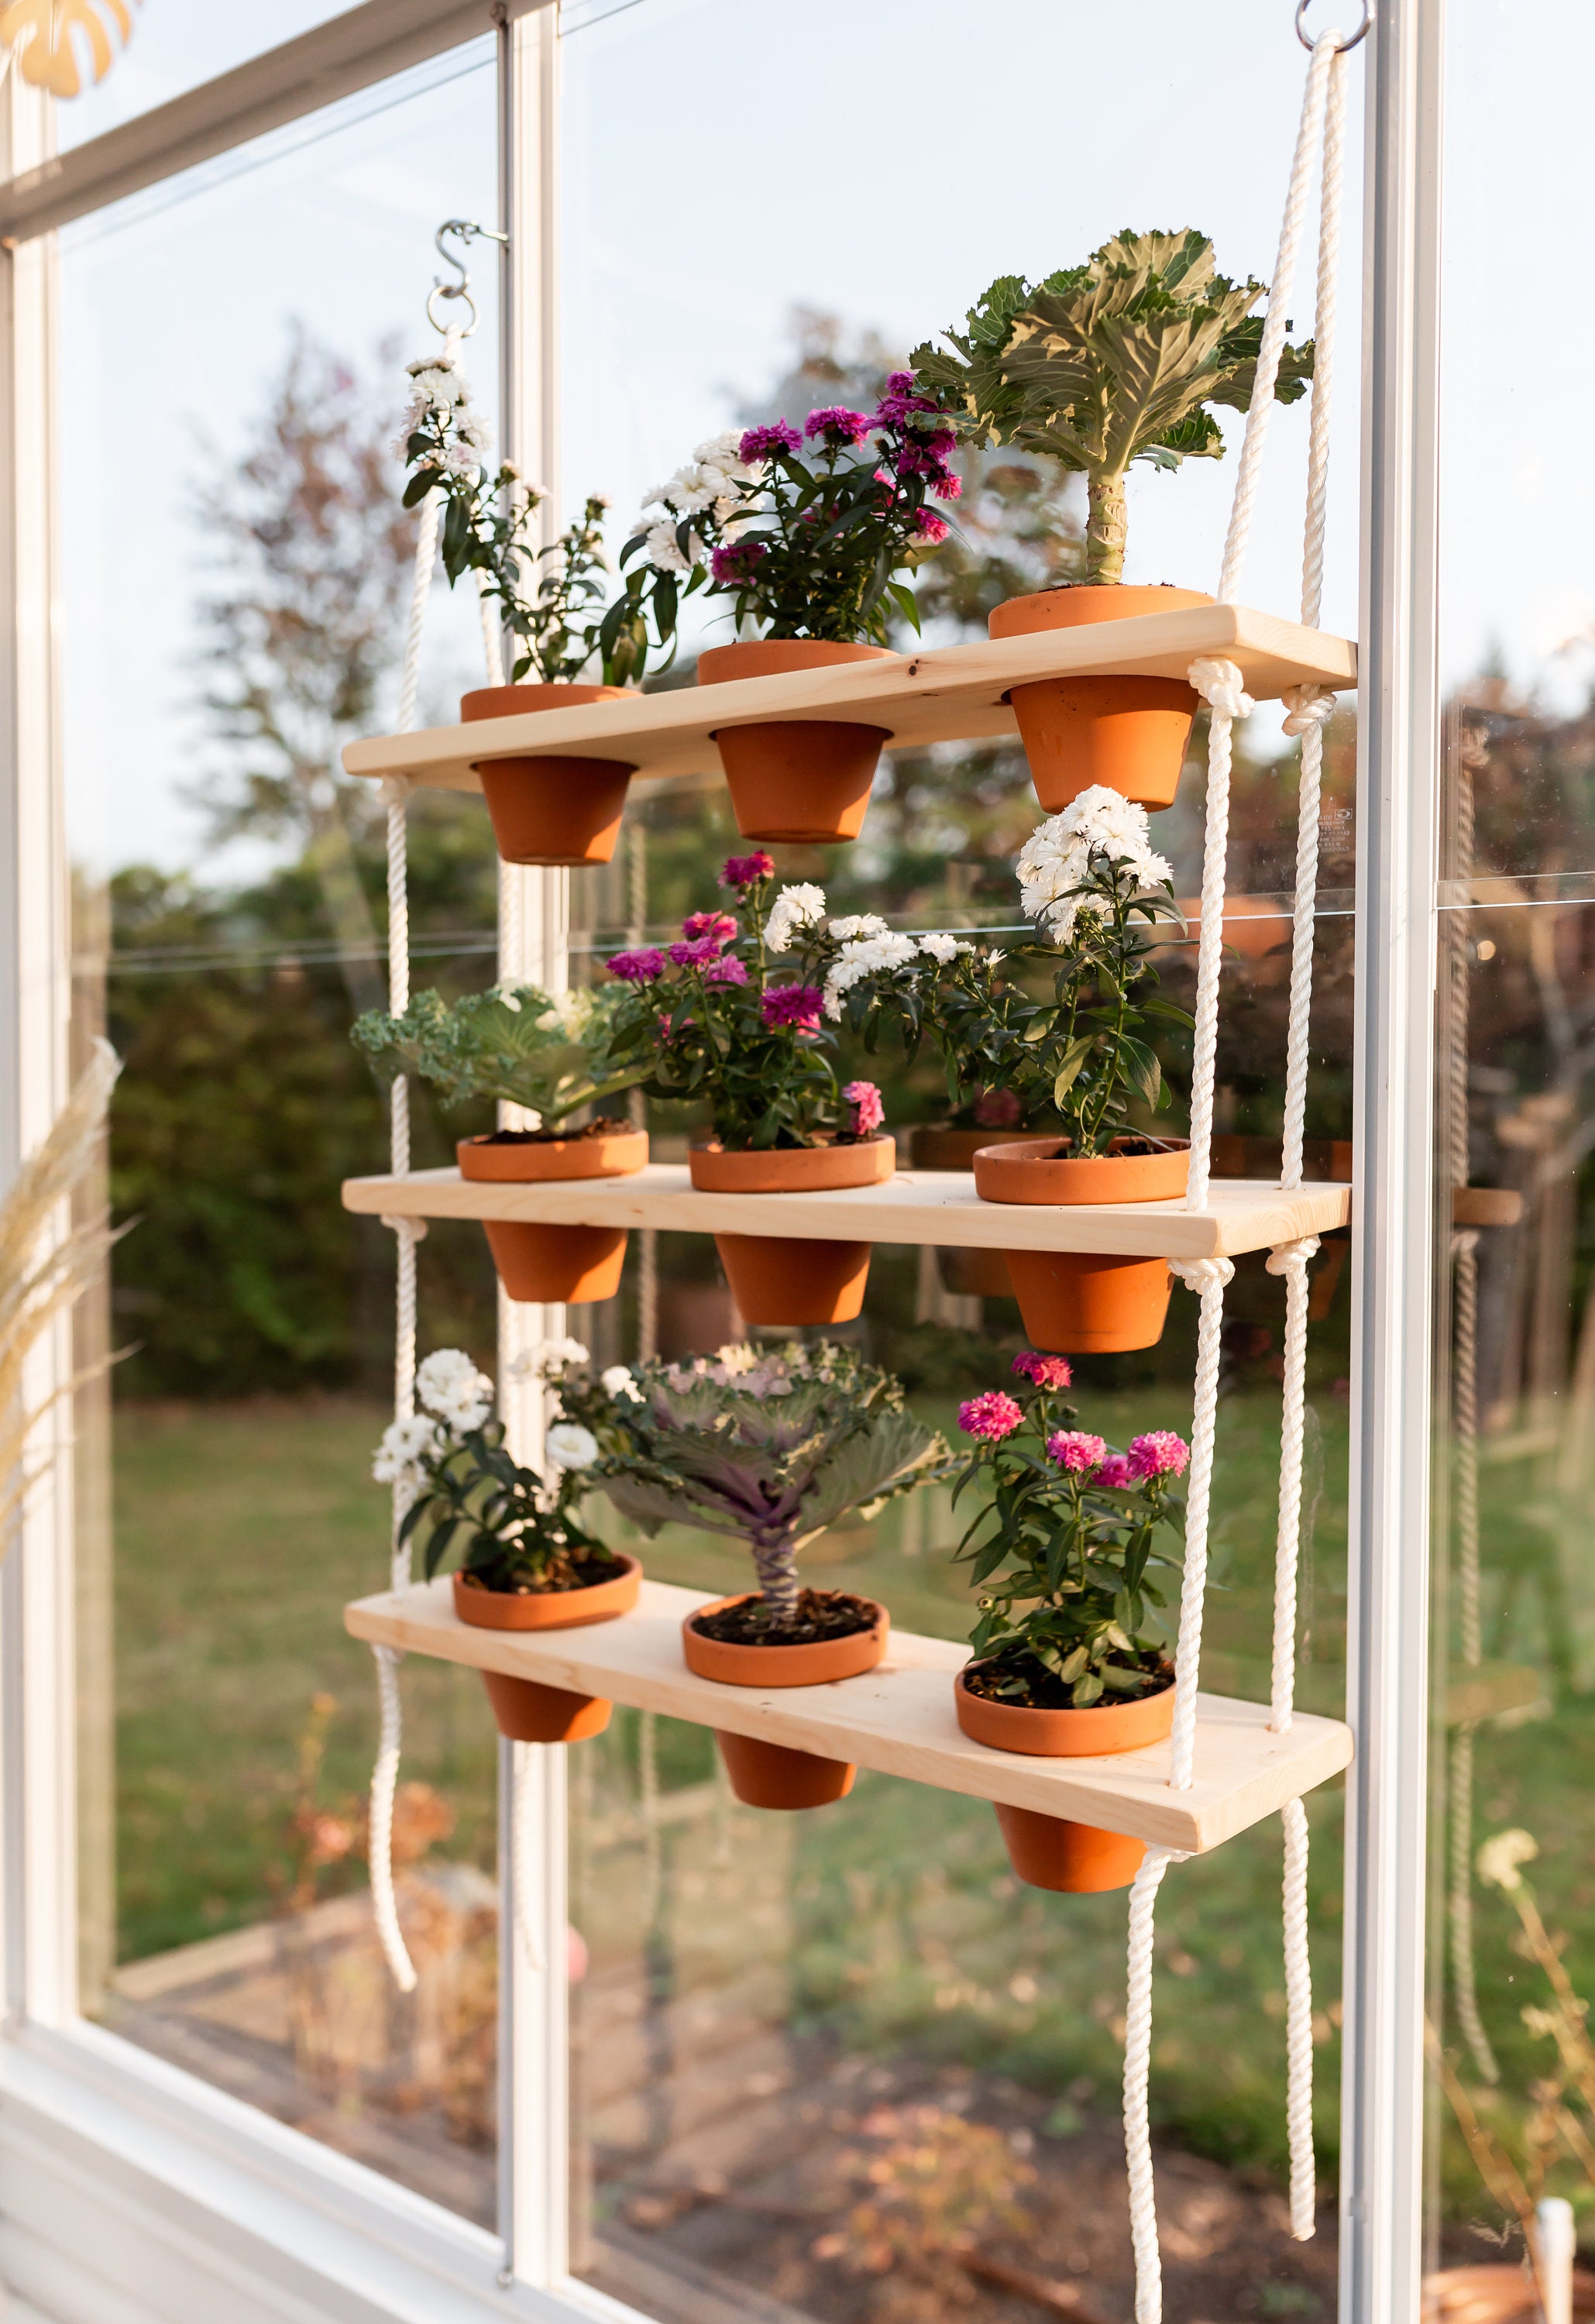 20 neat plant shelf ideas for interior windows - 149